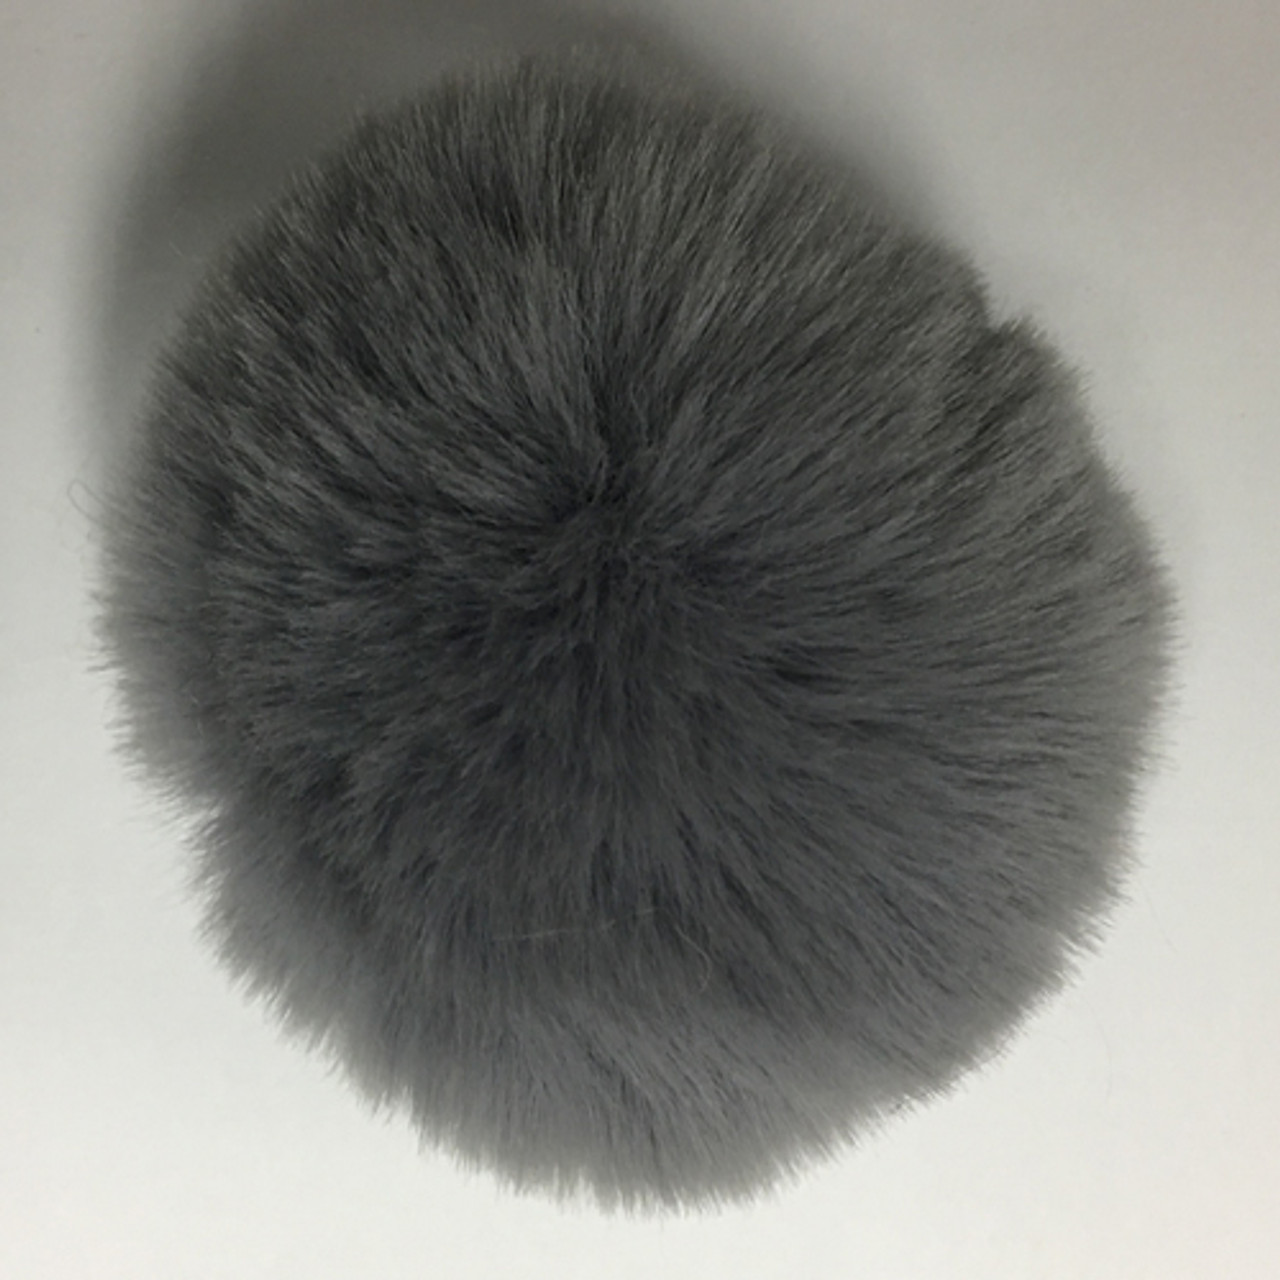 Natural Genuine Rabbit Fur Pom Pom Ball 3.5” – 4” Inches